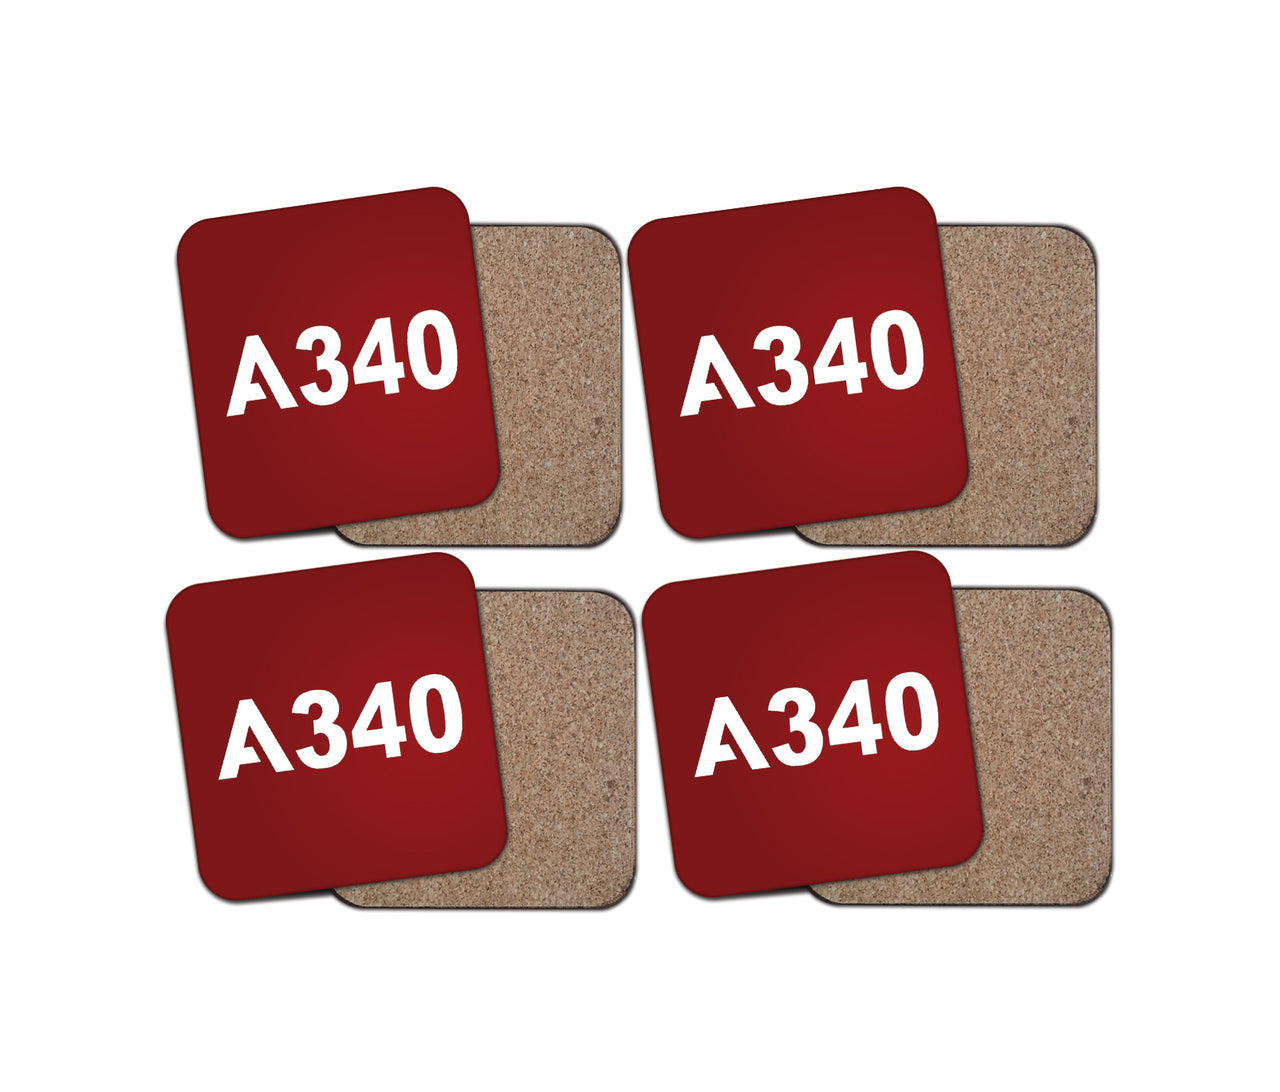 A340 Flat Text Designed Coasters